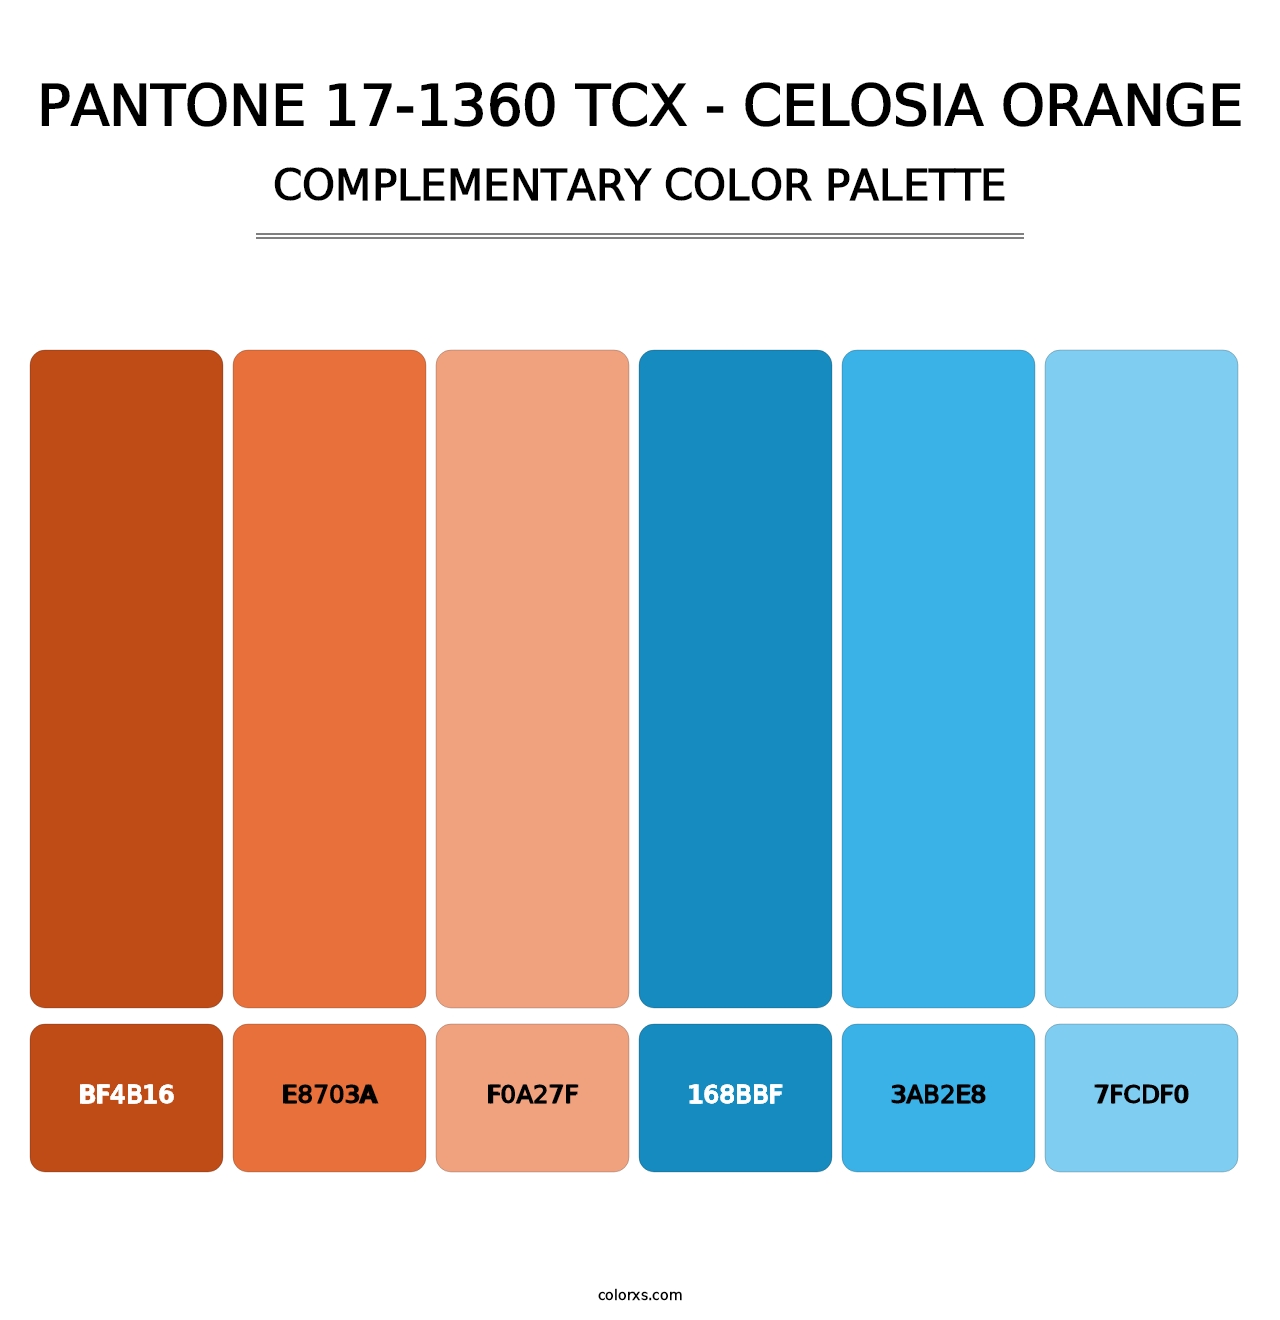 PANTONE 17-1360 TCX - Celosia Orange - Complementary Color Palette